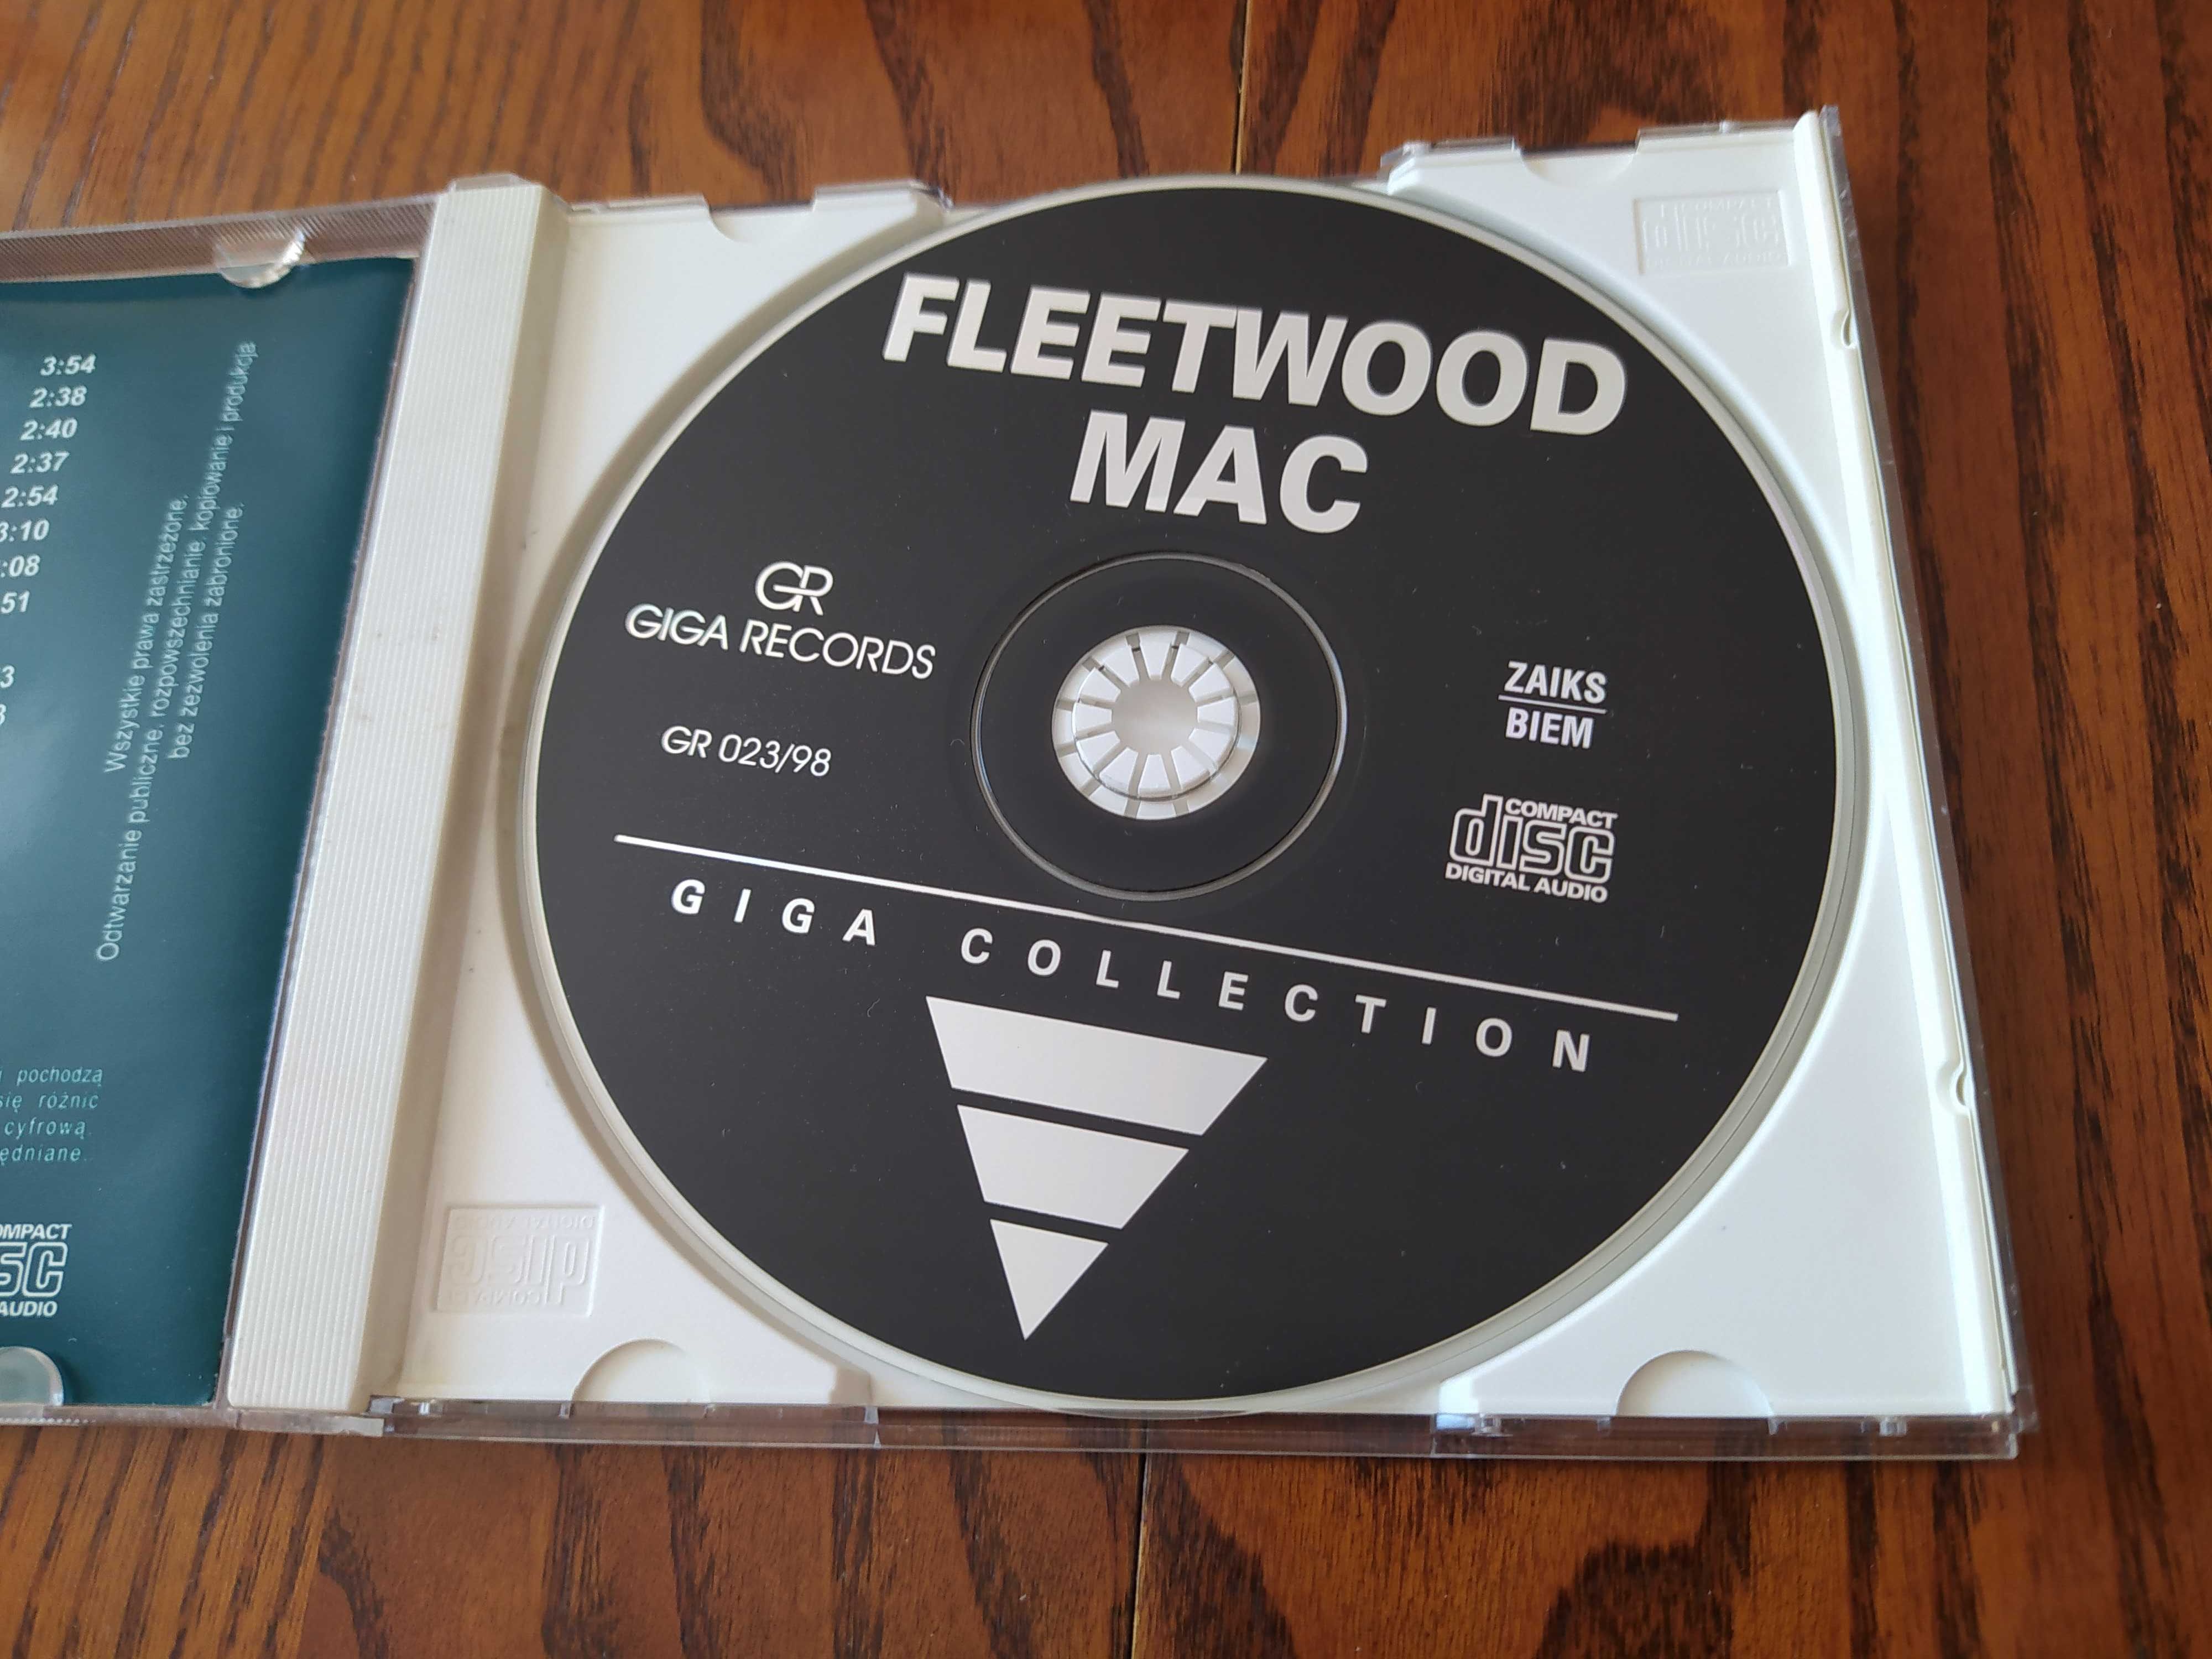 Album CD Fleetwood Mac The best - kolekcja